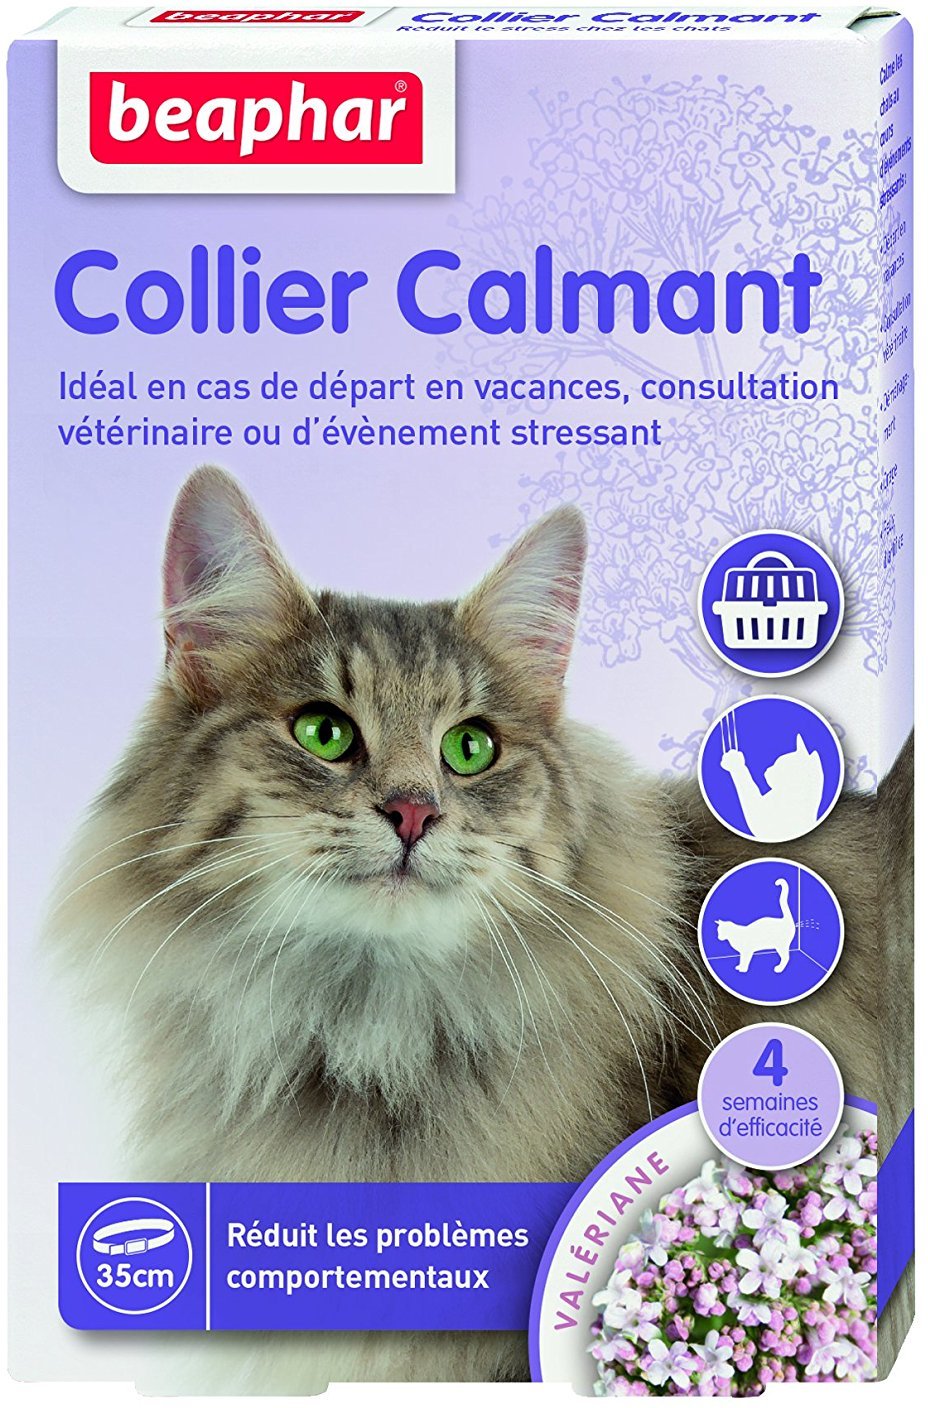 Beaphar Collier Calmant pentru pisici - zoom